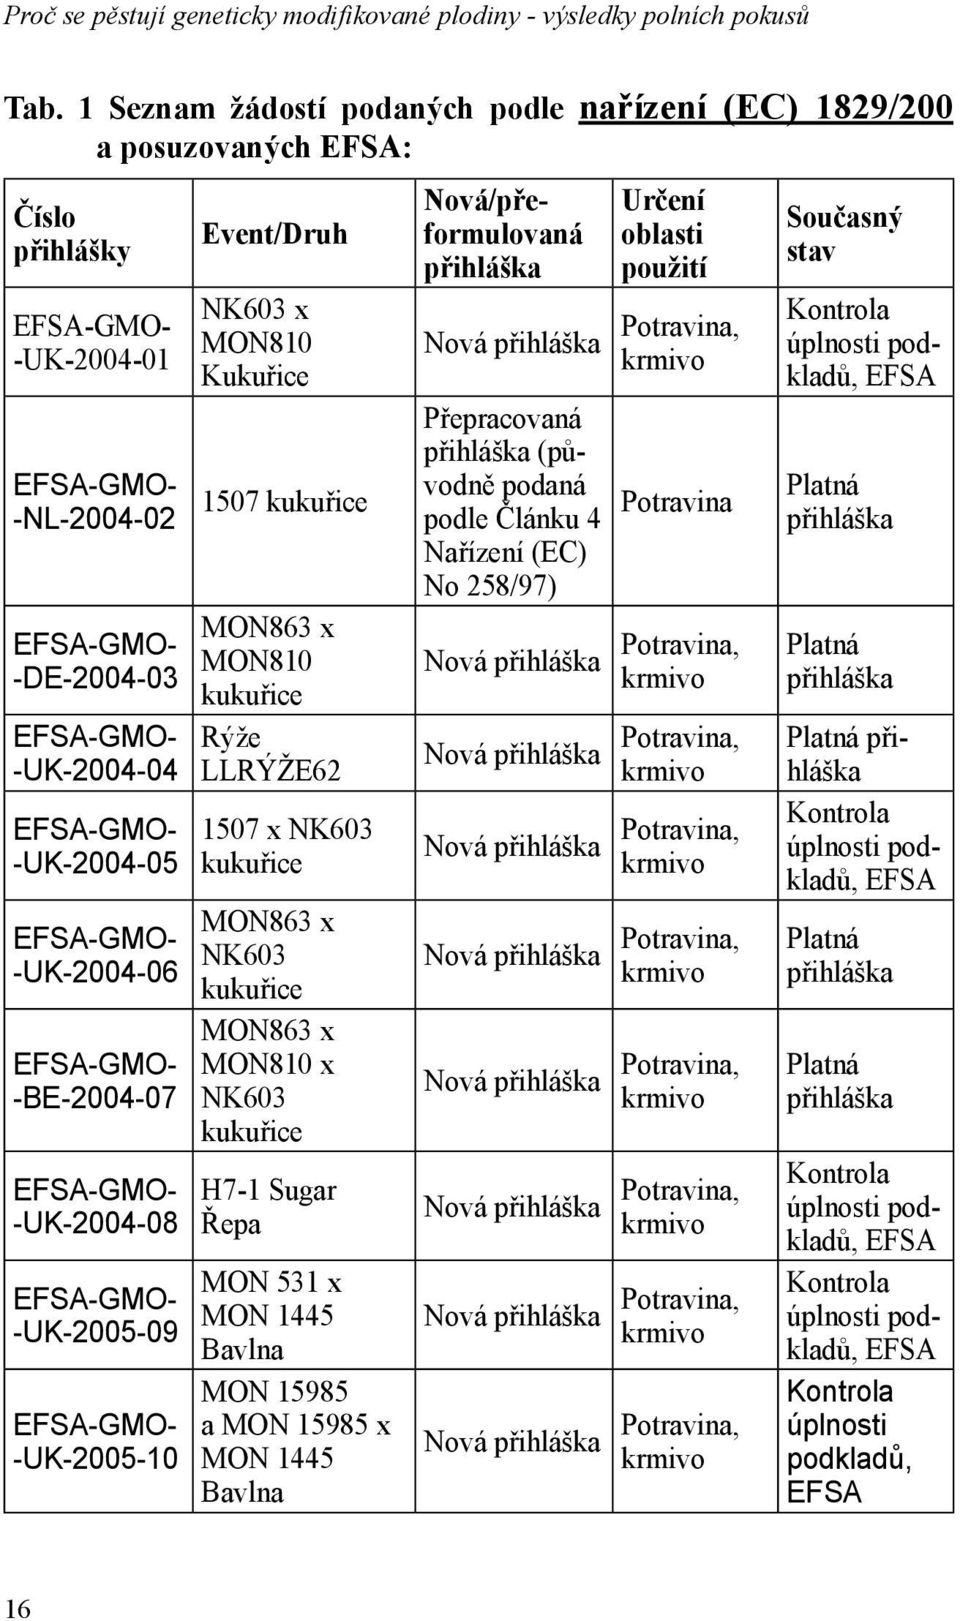 Kontrola úplnosti podkladů, EFSA EFSA-GMO- -UK-2004-05 EFSA-GMO- -UK-2004-06 EFSA-GMO- -BE-2004-07 EFSA-GMO- -UK-2004-08 EFSA-GMO- -UK-2005-09 EFSA-GMO- -UK-2005-10 Event/Druh NK603 x MON810 Kukuřice